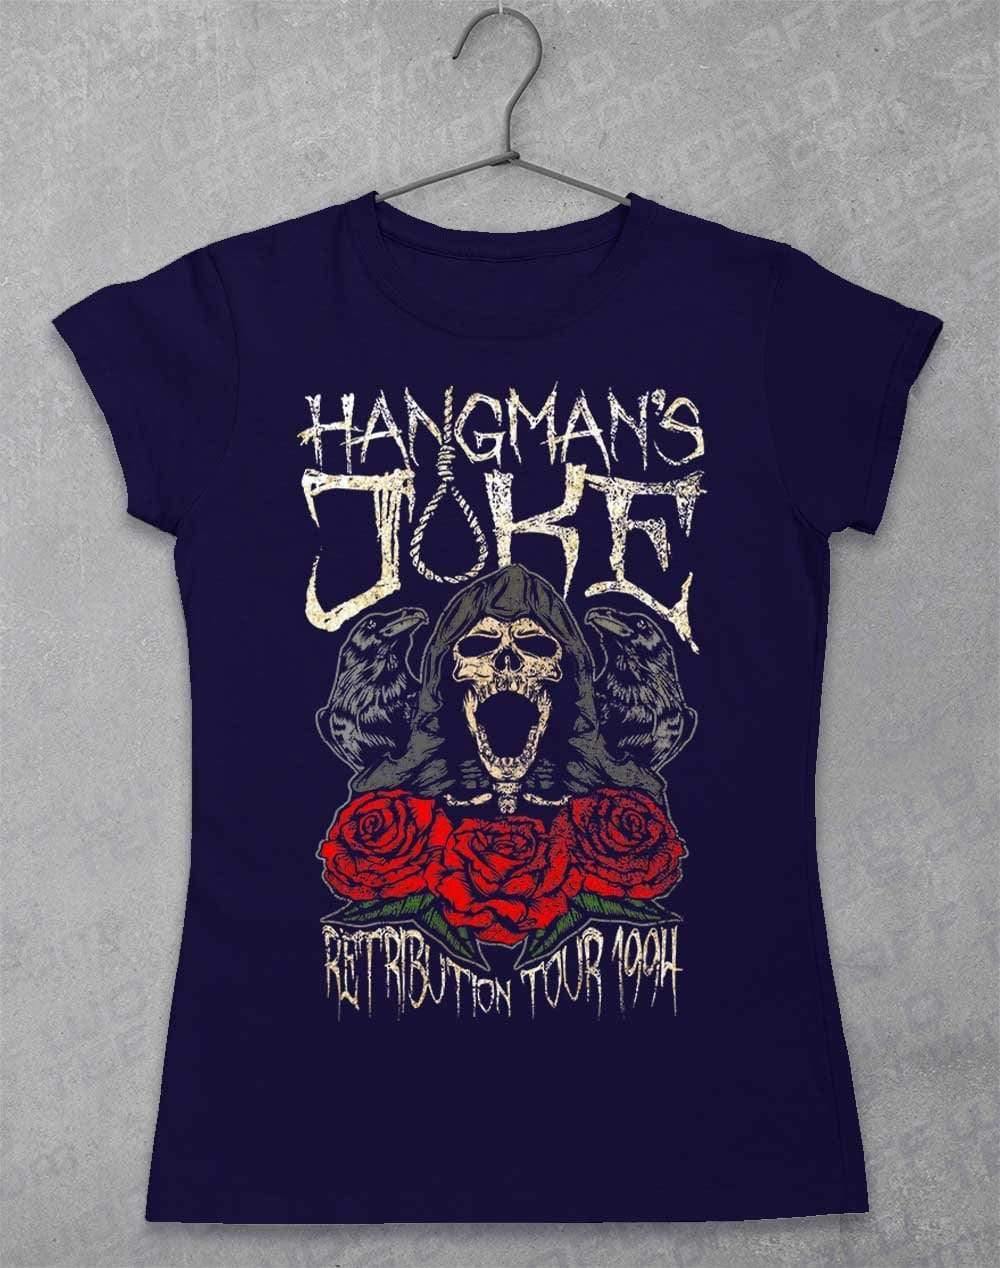 Hangman's Joke Retribution Tour 94 Womens T-Shirt 8-10 / Navy  - Off World Tees